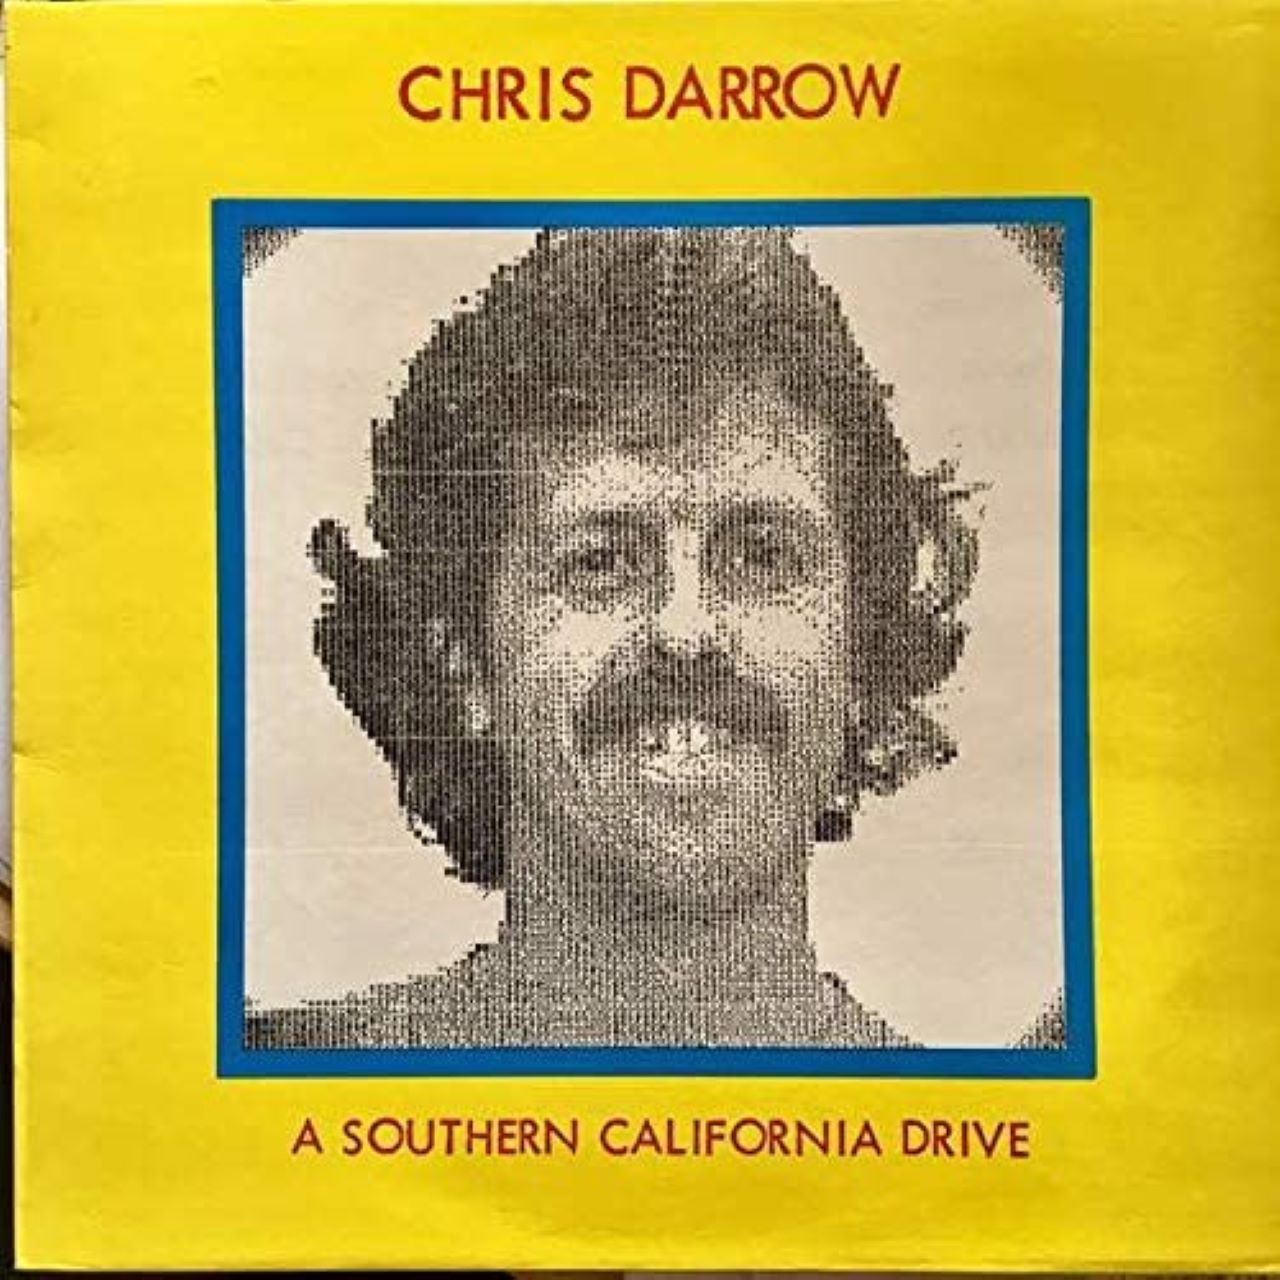 Chris Darrow - A Southern California Drive cover album